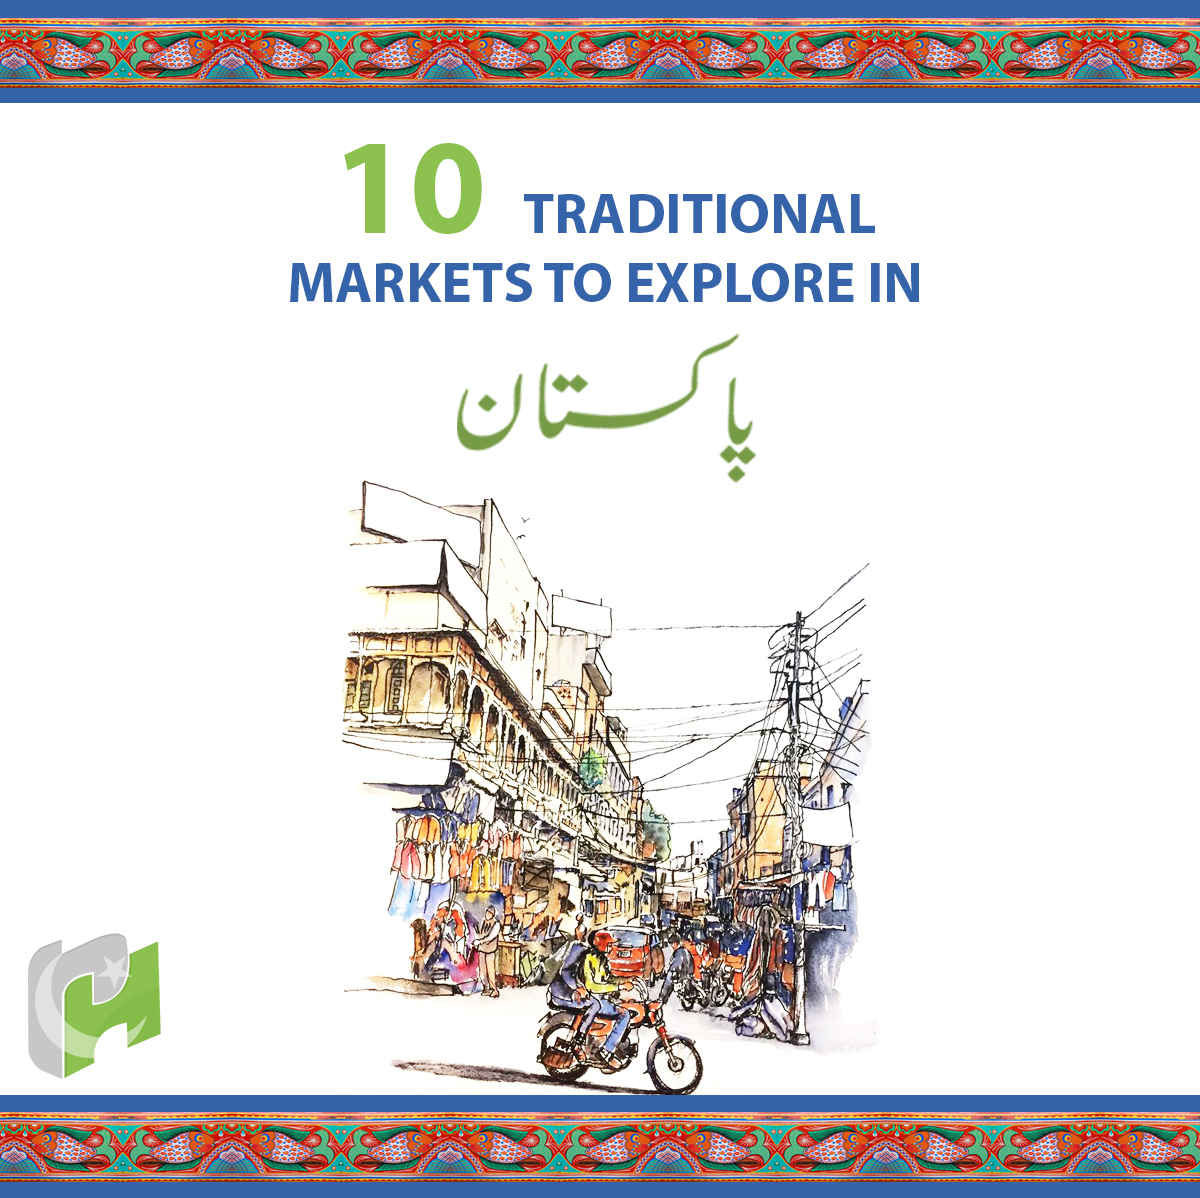 Traditional marketplaces Pakistan, bazar, traditional markets of Pakistan